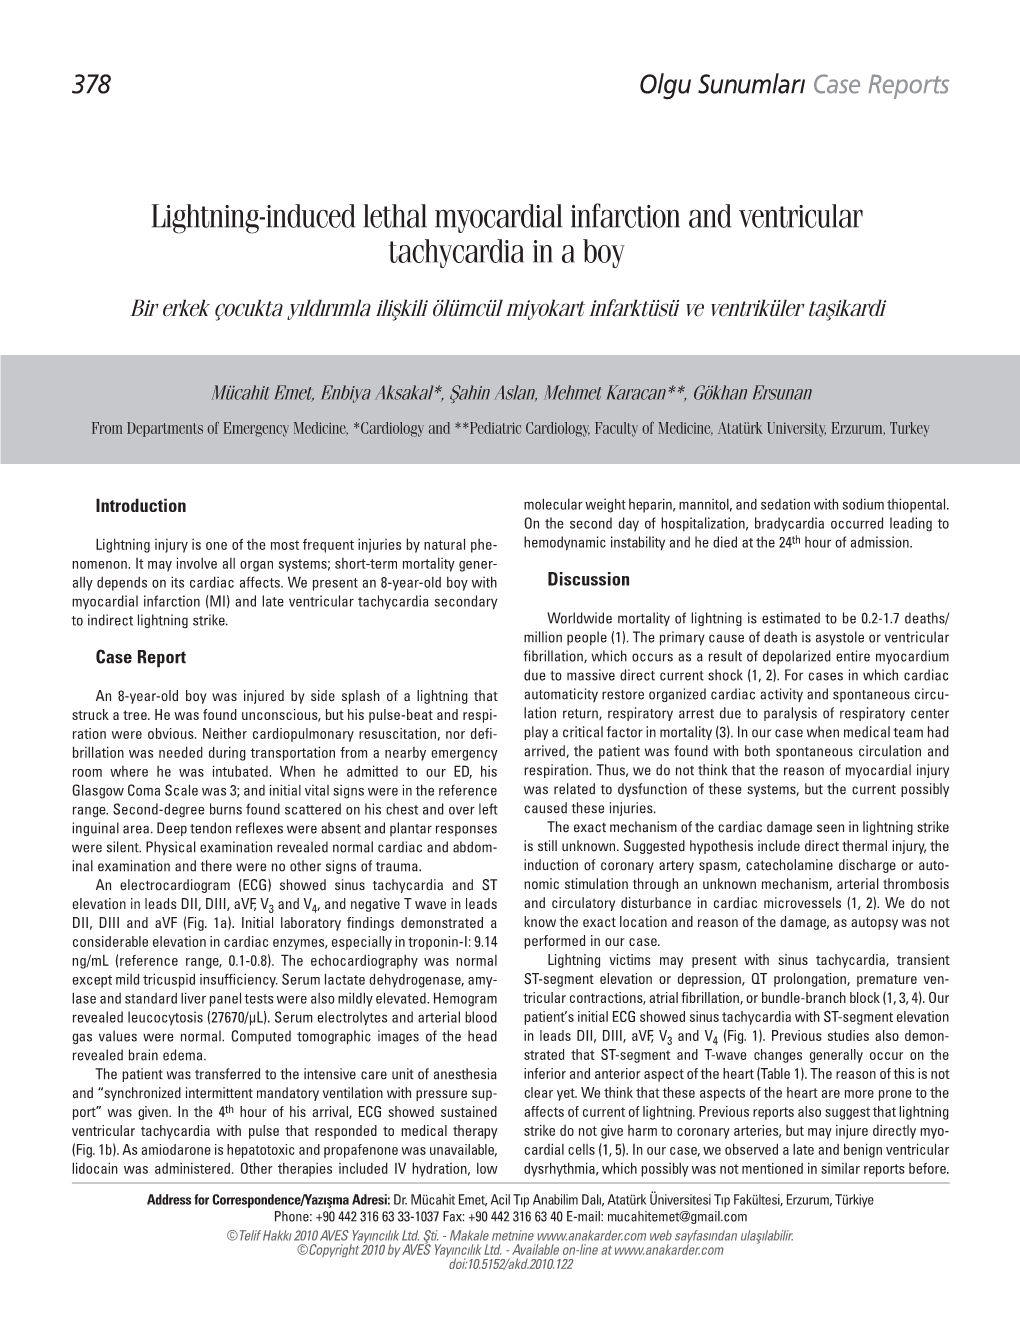 Lightning-Induced Lethal Myocardial Infarction and Ventricular Tachycardia in a Boy